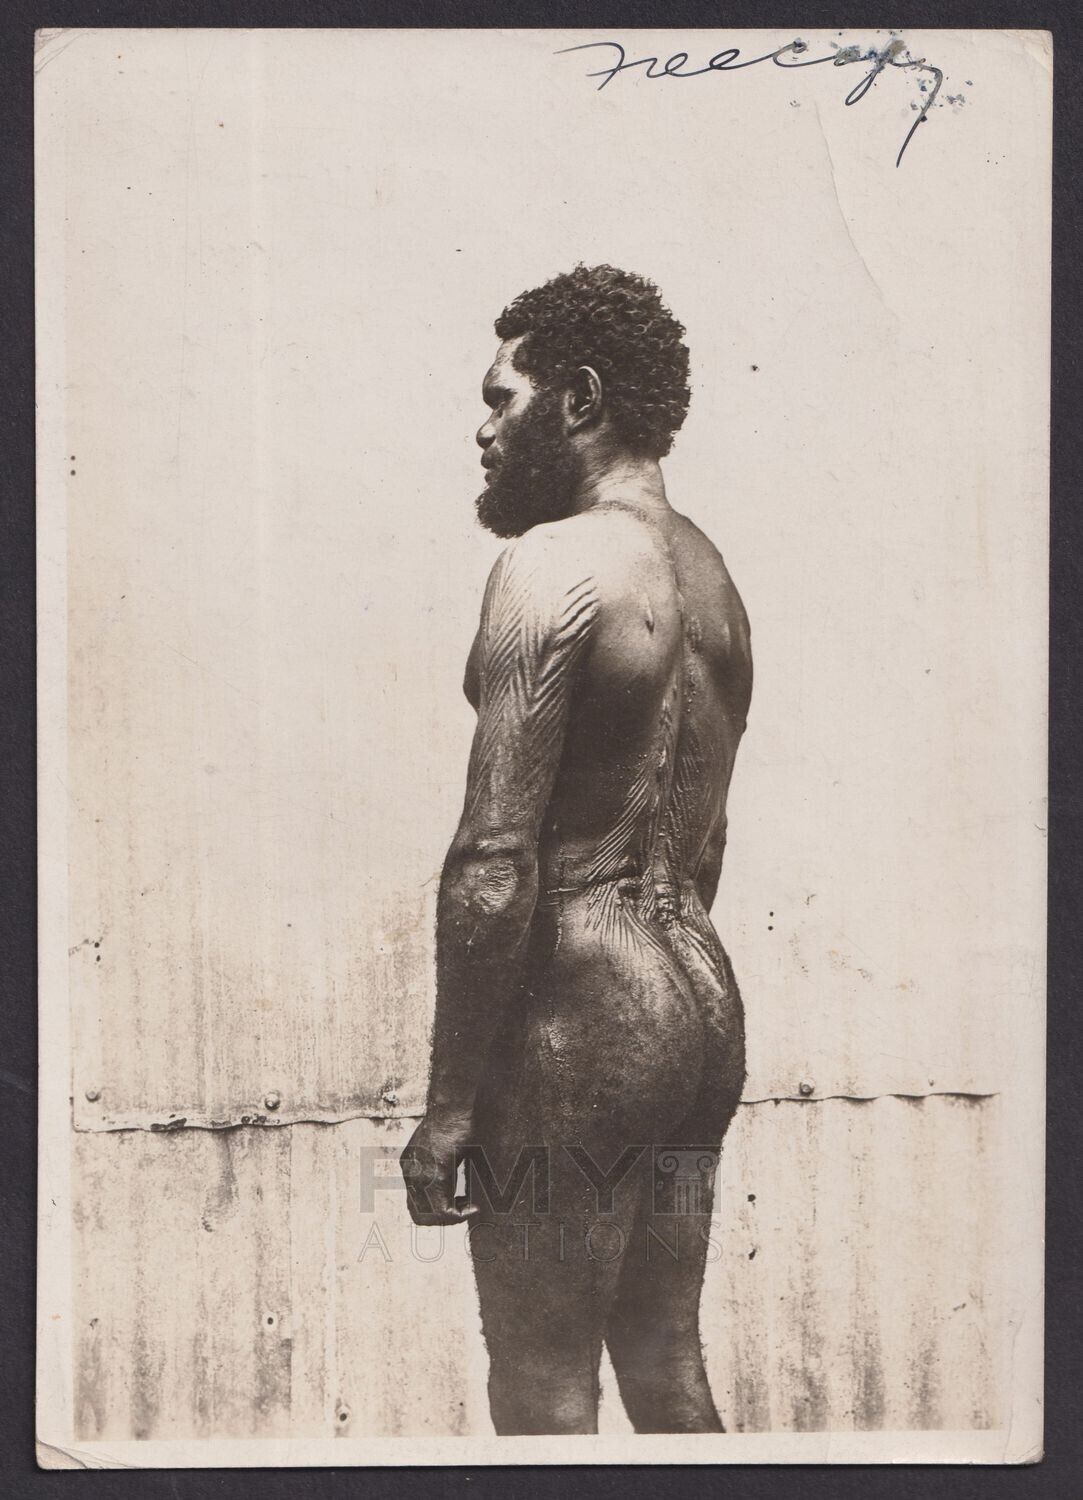 1920s Australian Native “Ornate Skin Mutations” Artisric Photograph